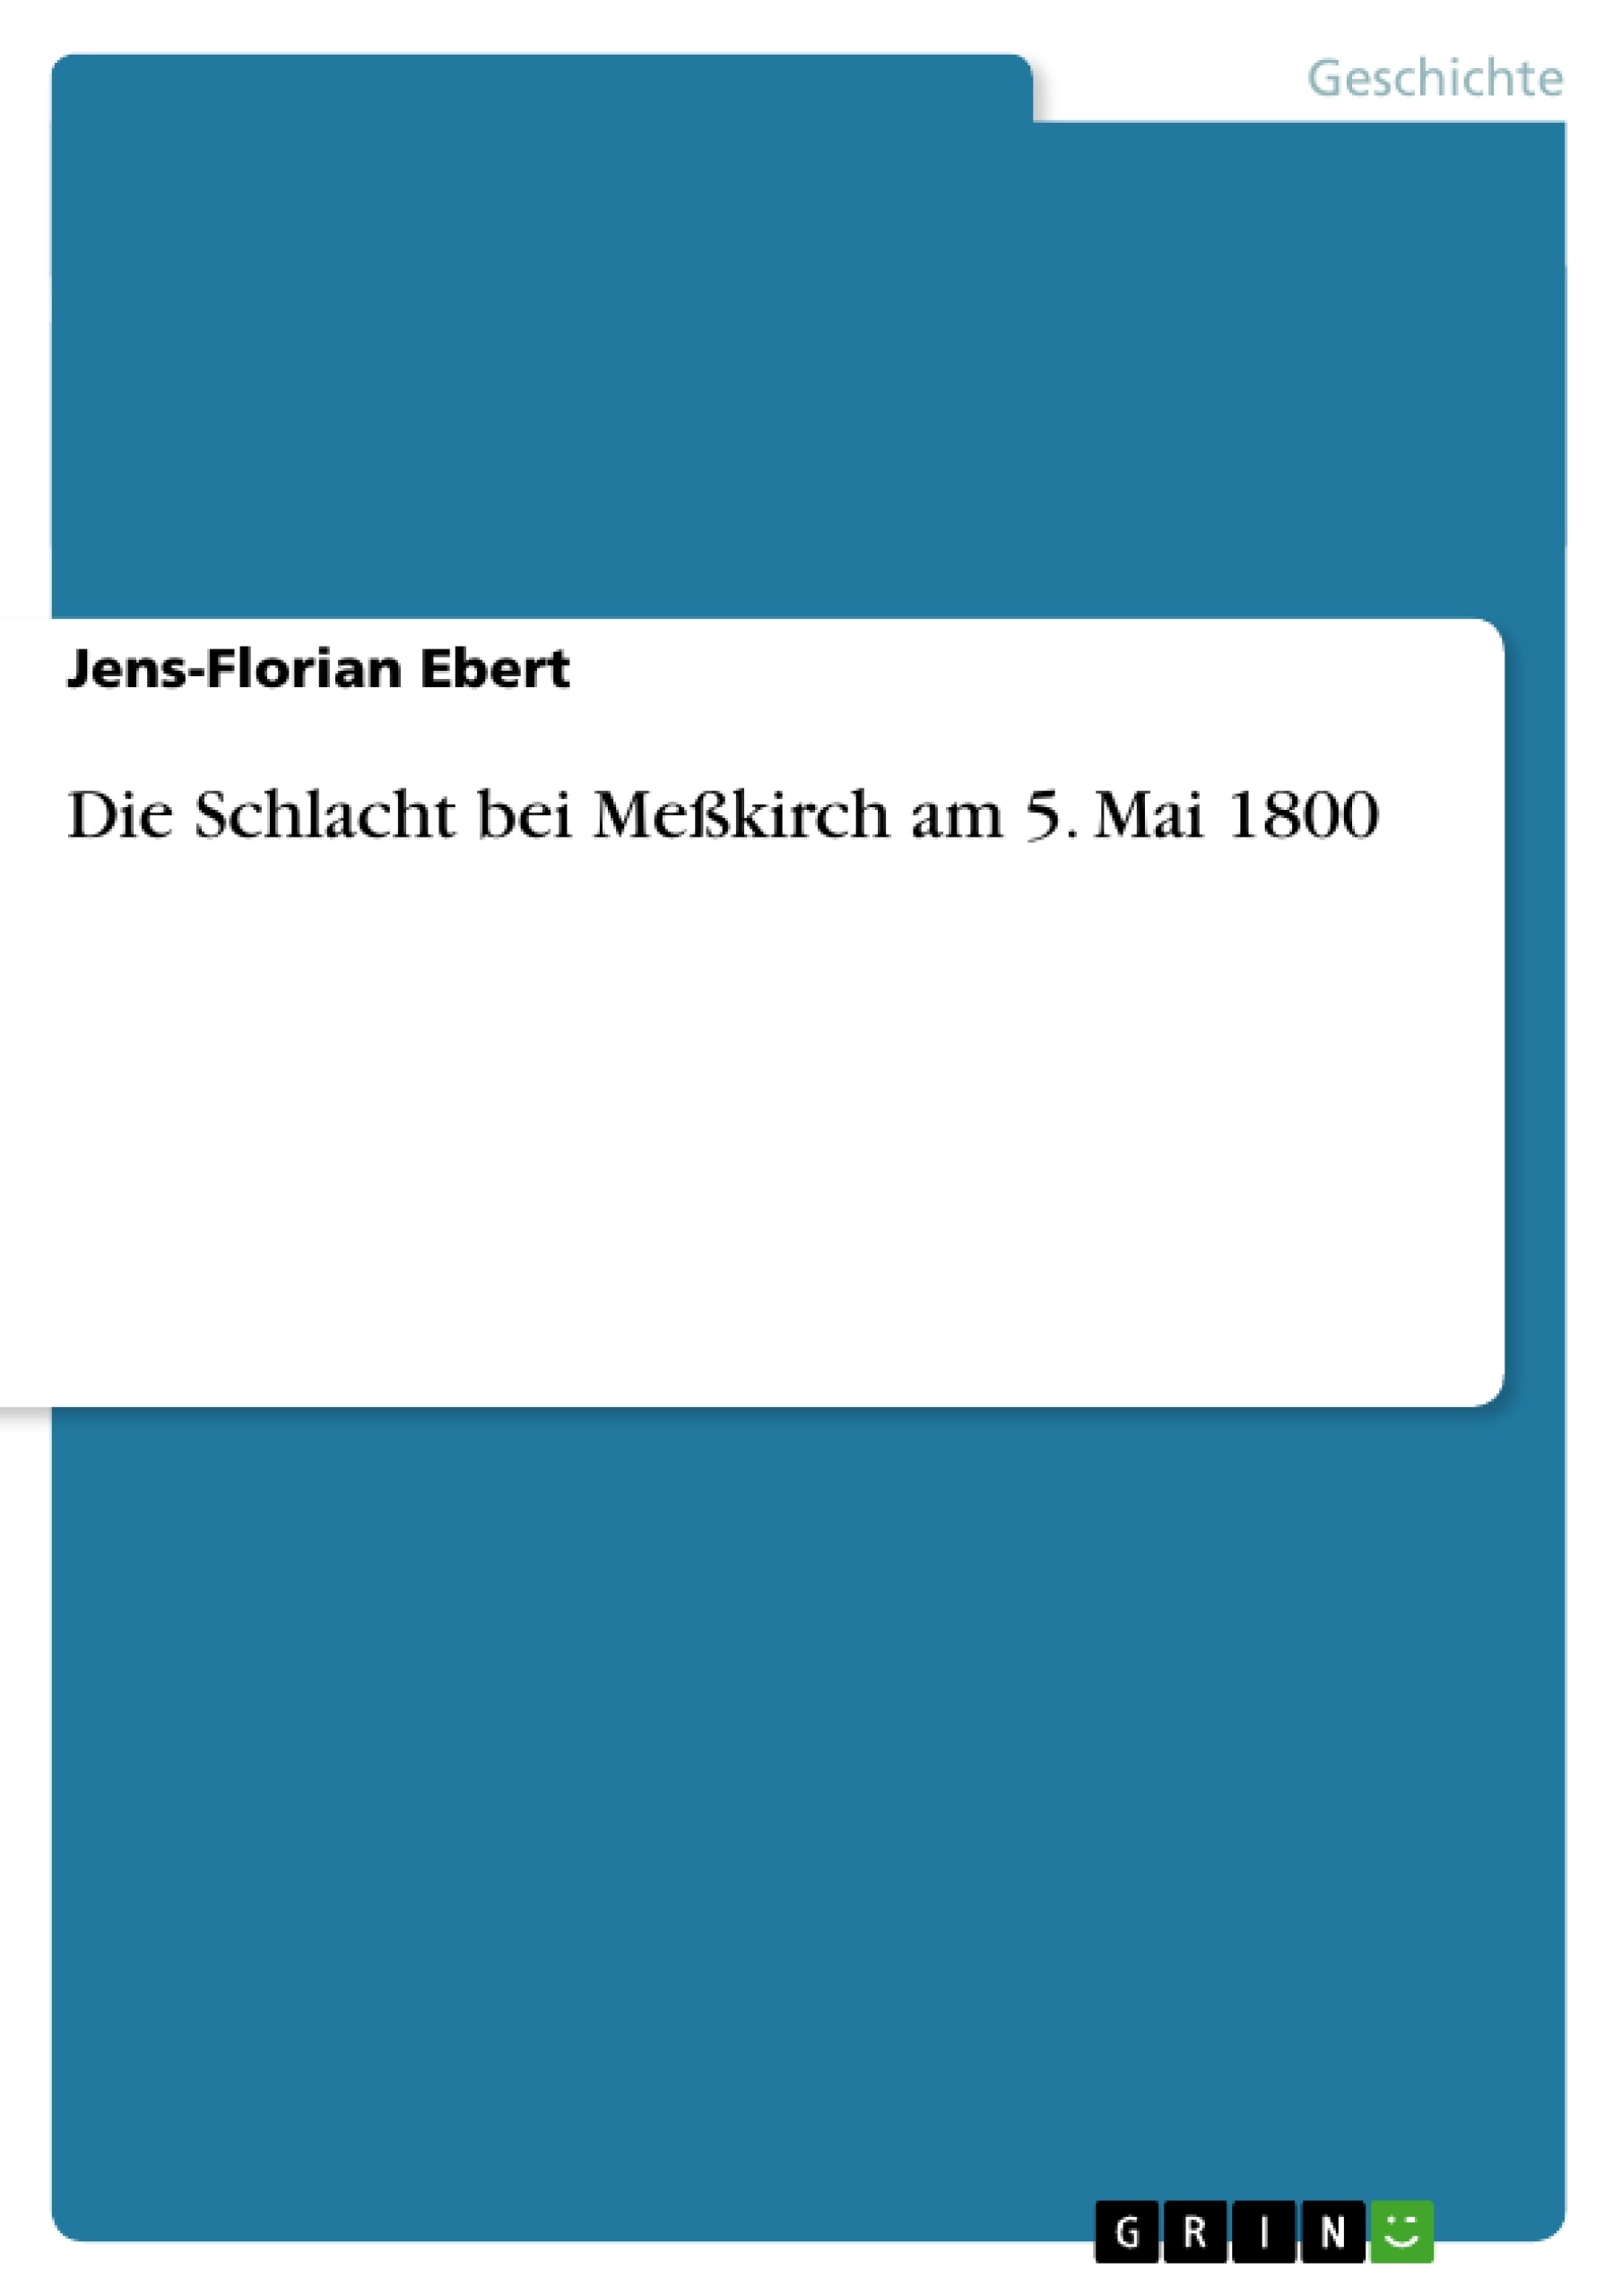 Title: Die Schlacht bei Meßkirch am 5. Mai 1800